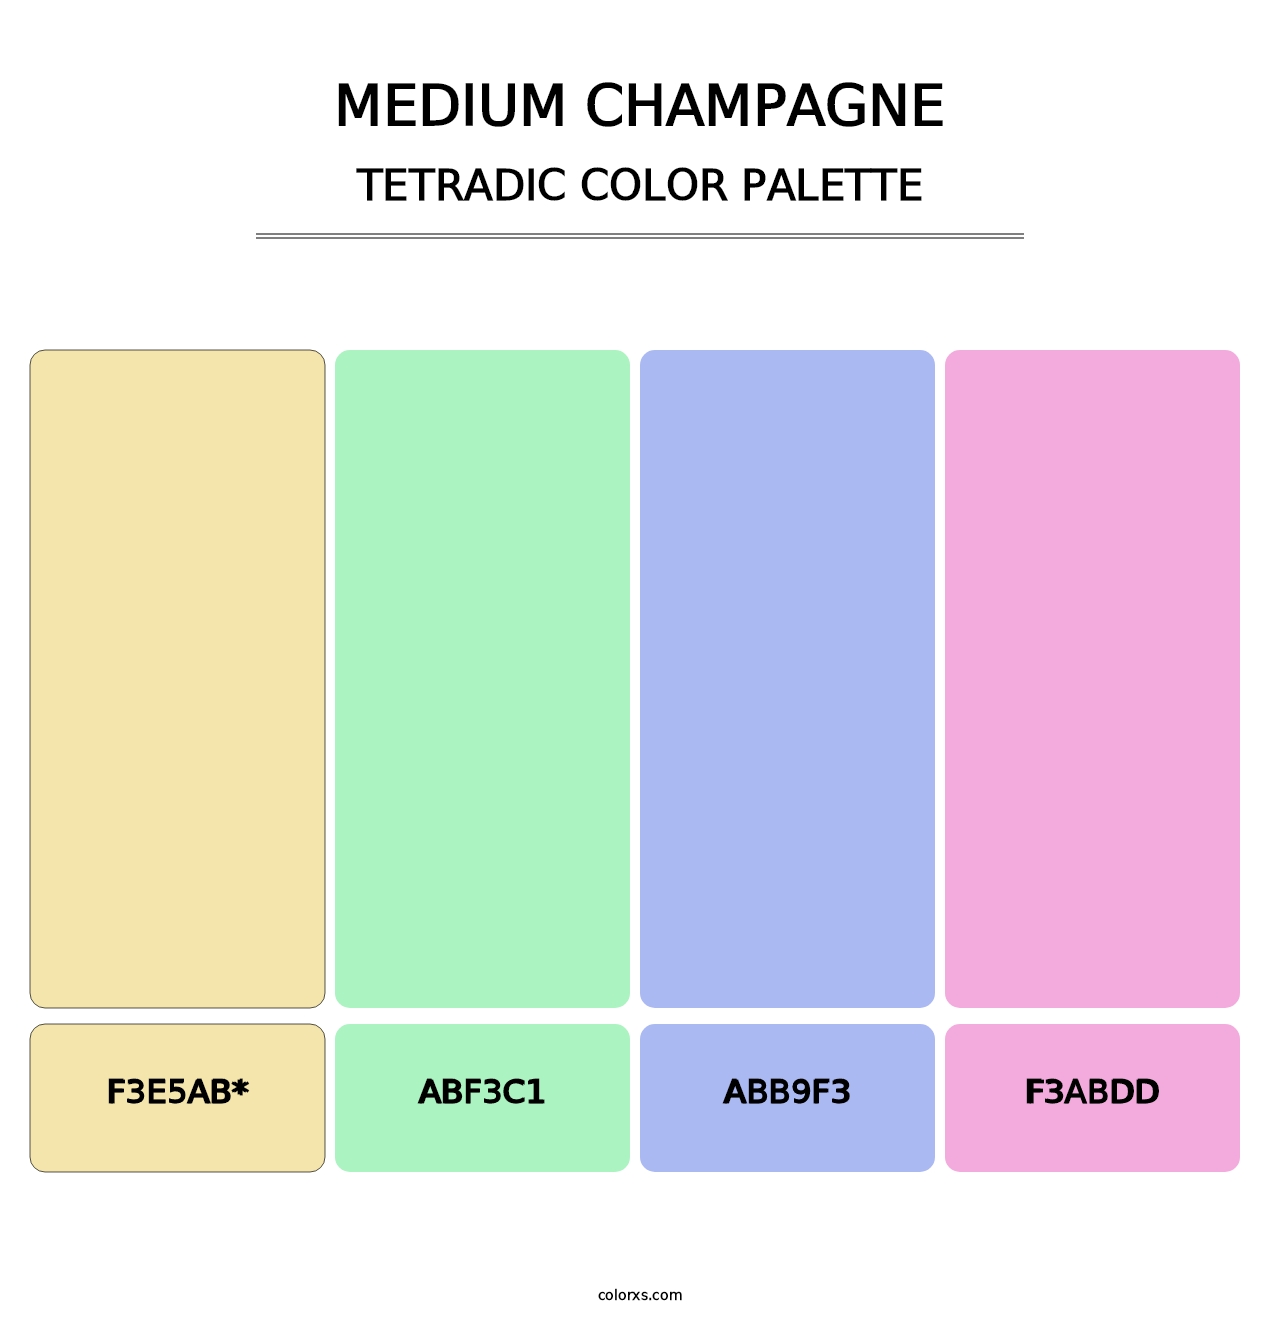 Medium Champagne - Tetradic Color Palette